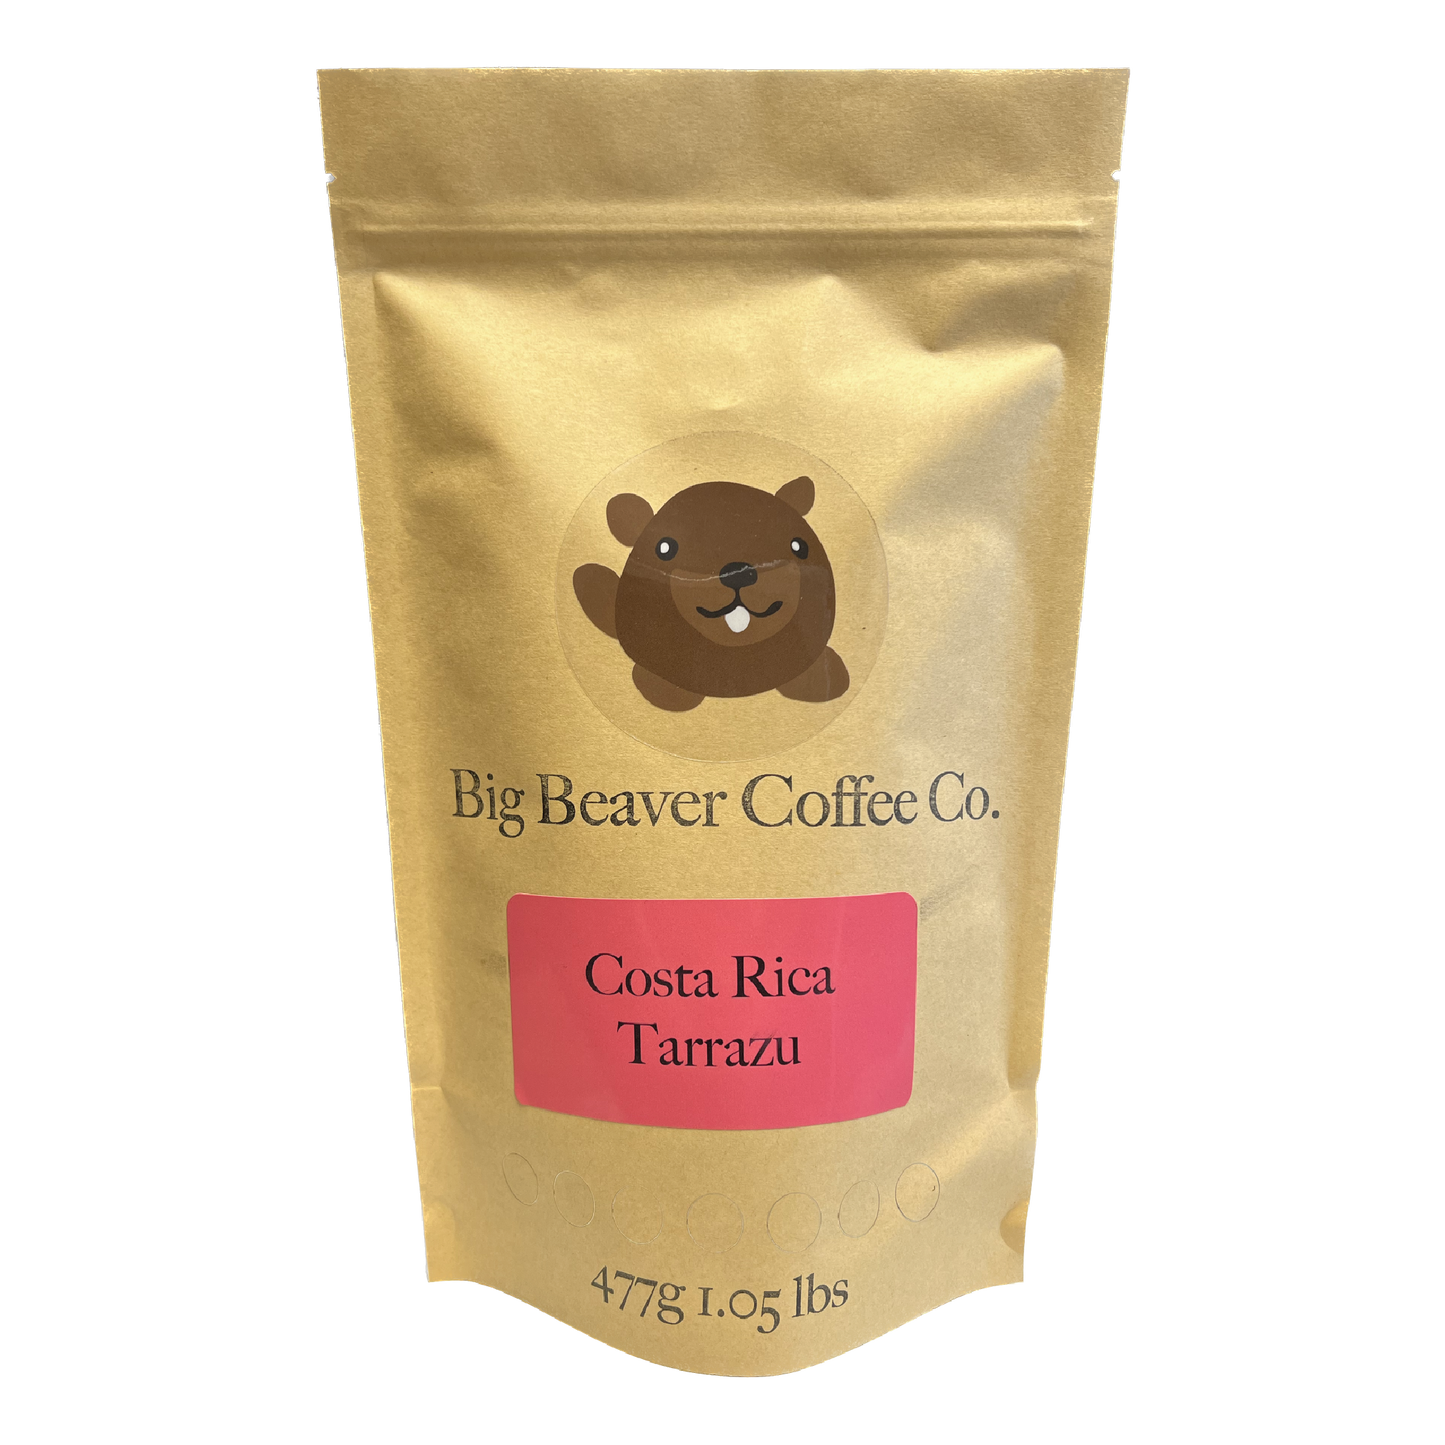 Big Beaver Coffee, Small Batch Roasting, Fluid Bed Roasting, Origin Coffee, Costa Rica Tarrazu, Whole Bean, Ground Coffee.